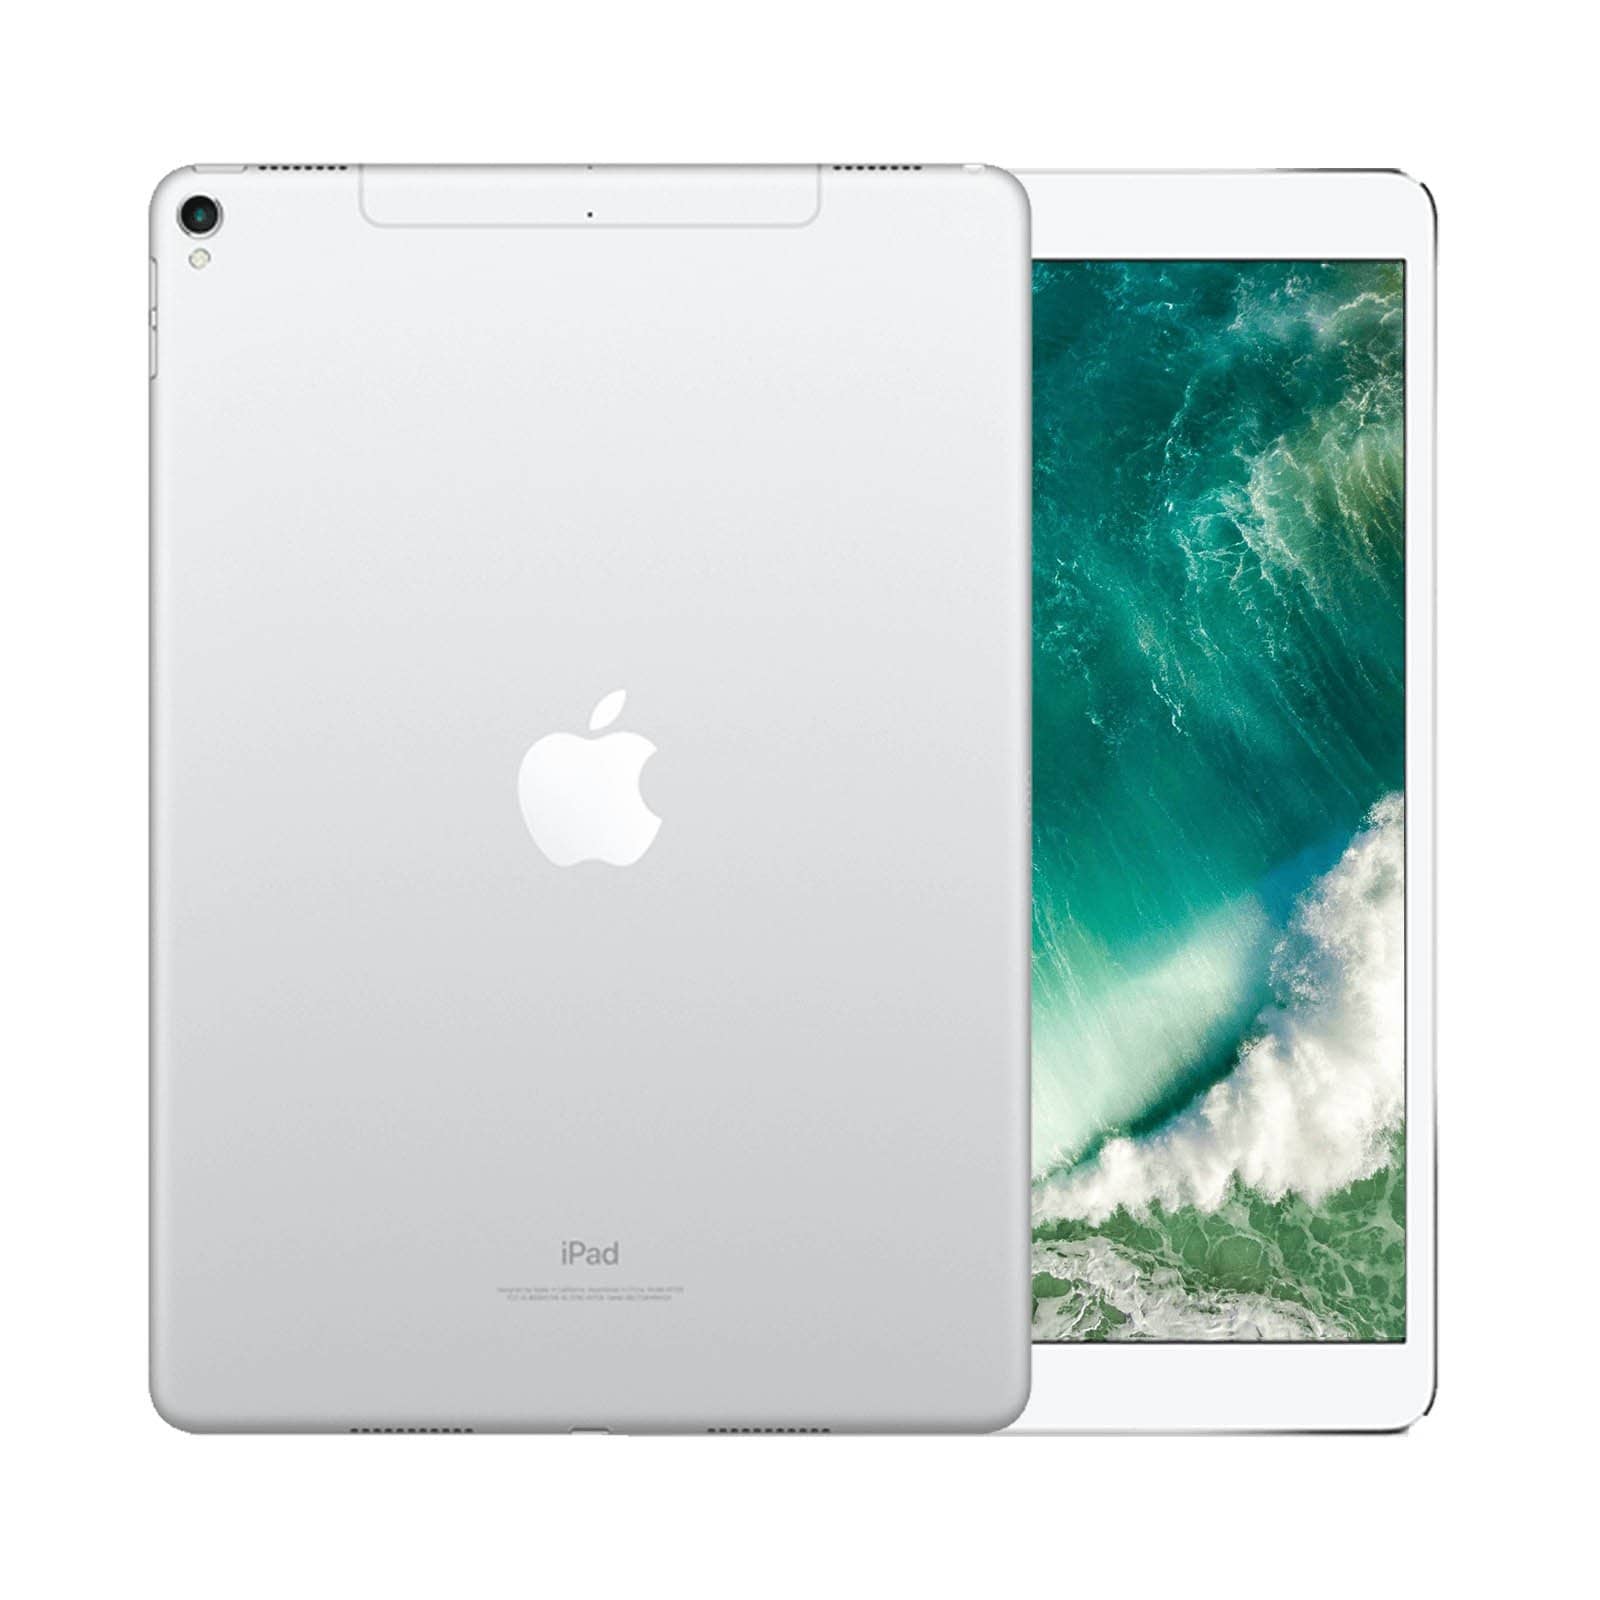 iPad Pro 10.5 Inch 64GB Silver Good - Unlocked 64GB Silver Good